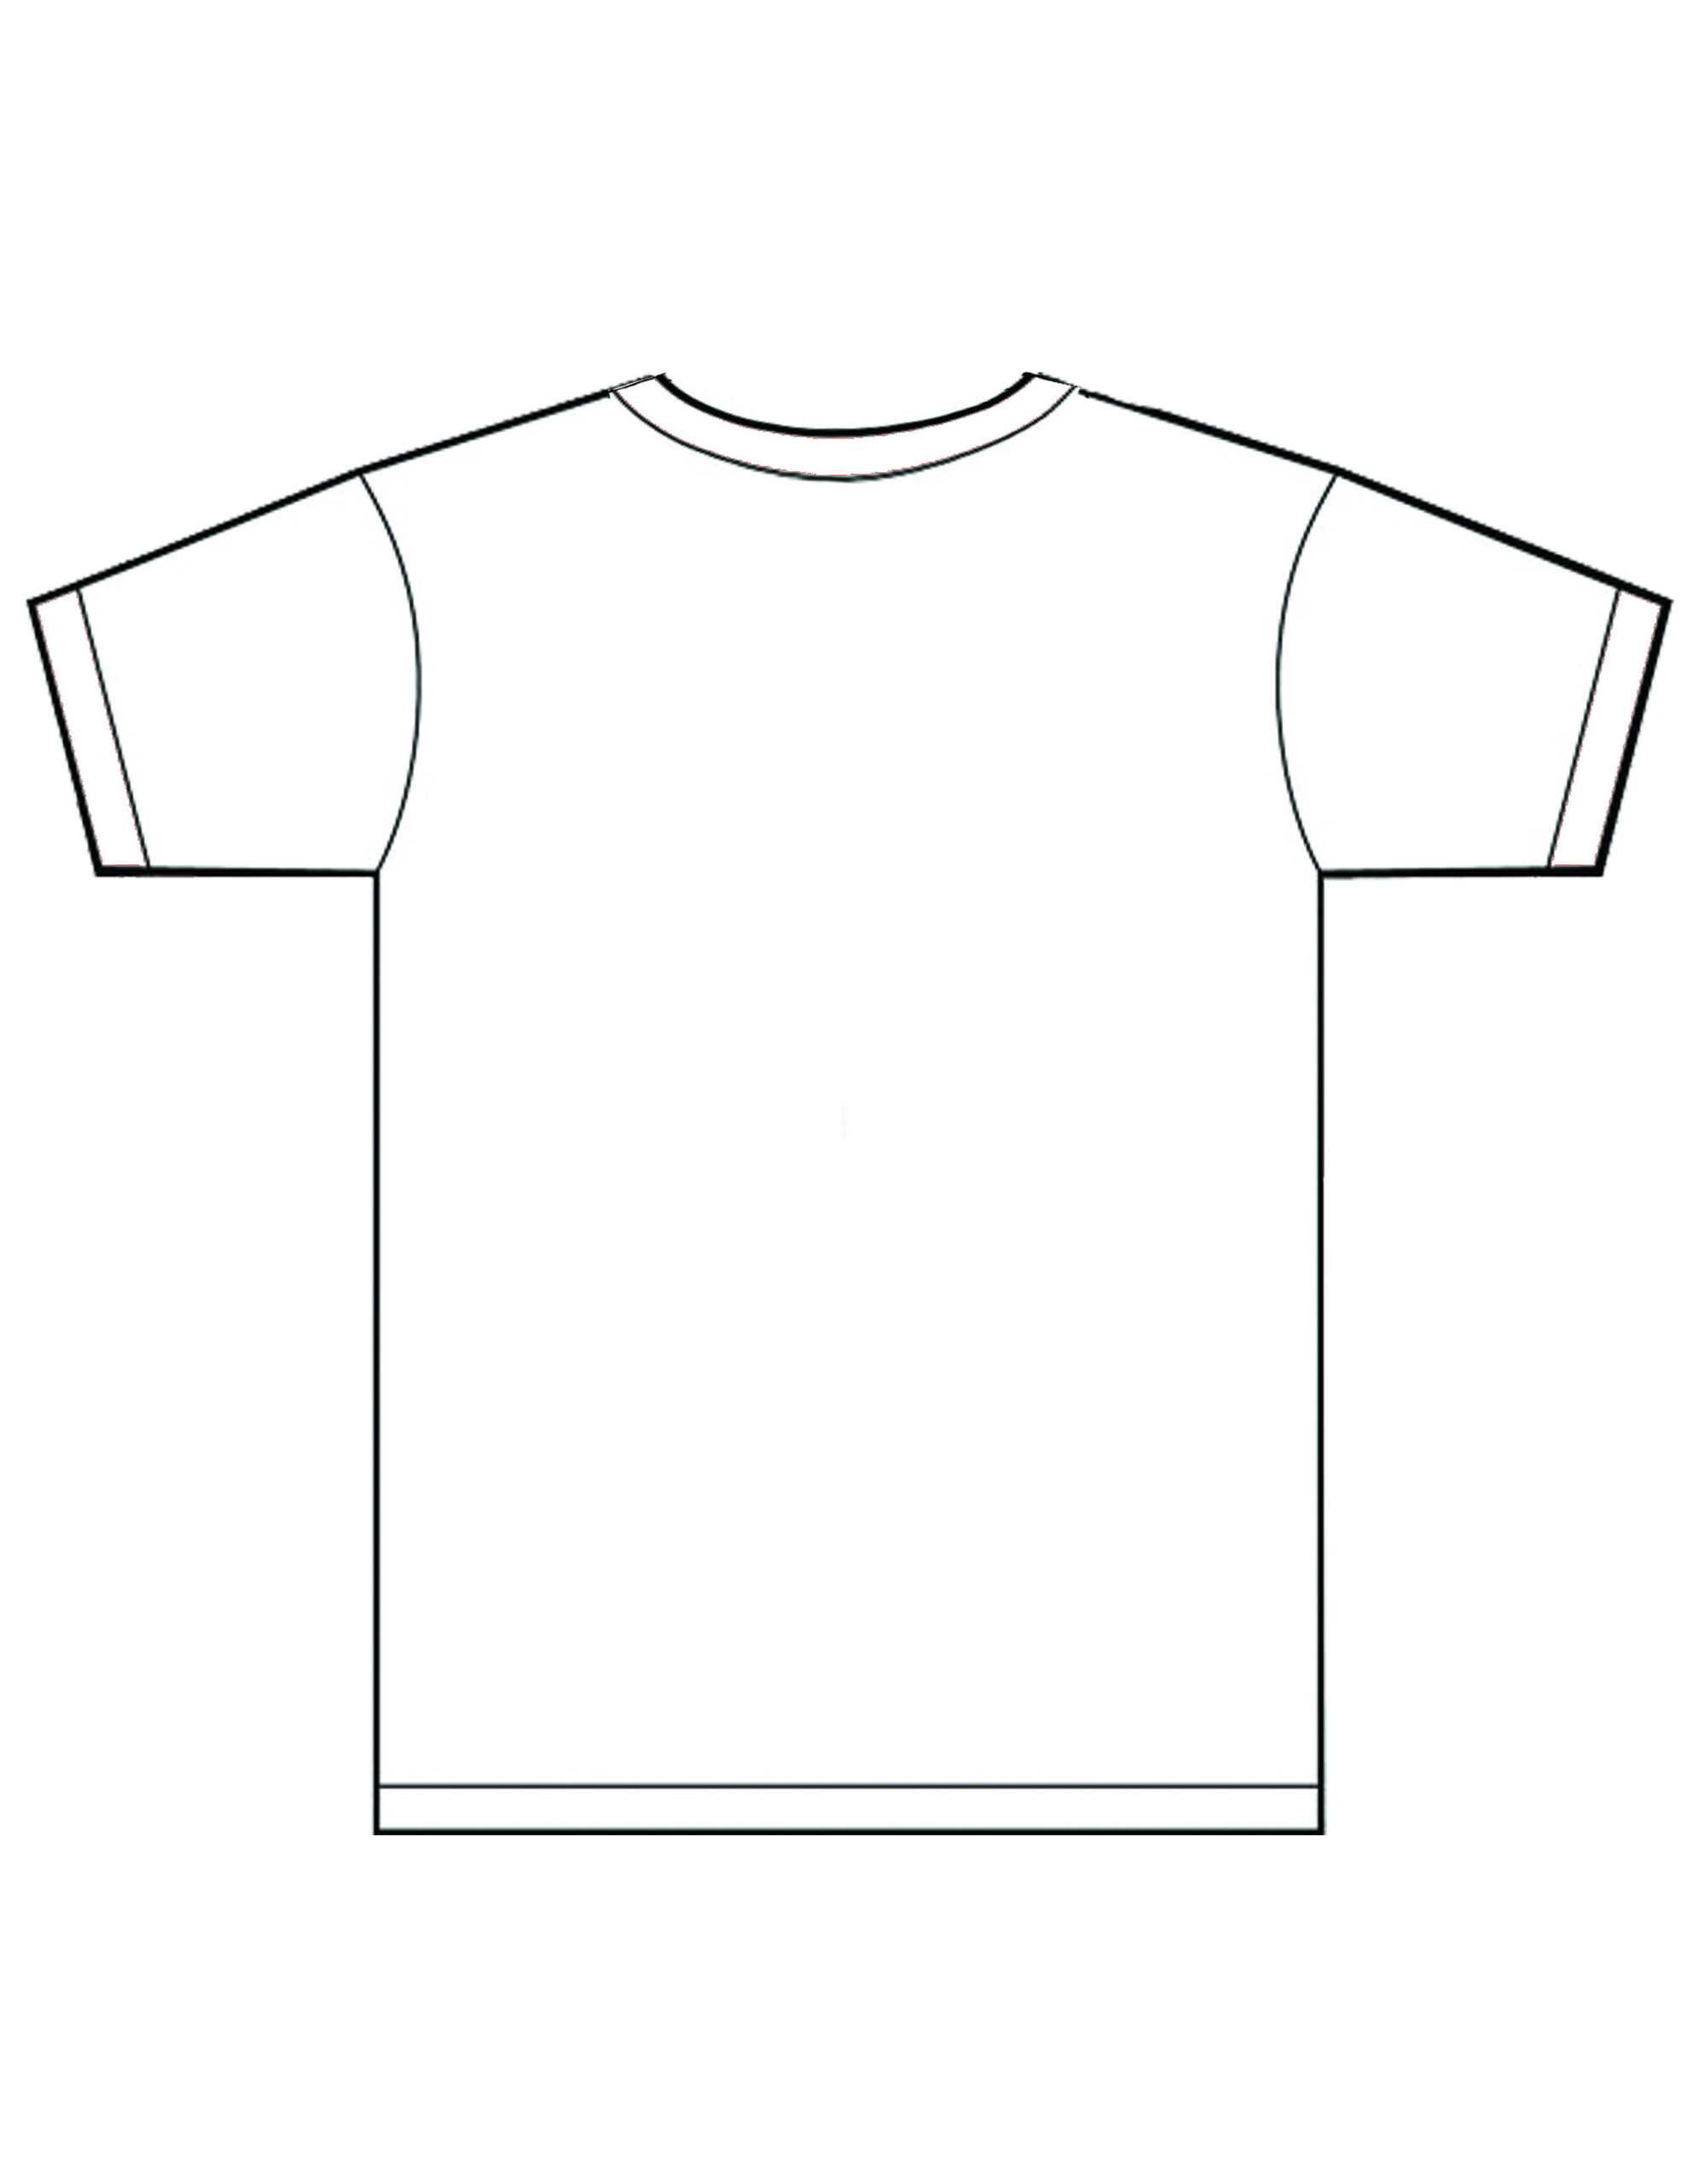 Blank T Shirts Template Photoshop | Rldm With Regard To Blank T Shirt Design Template Psd